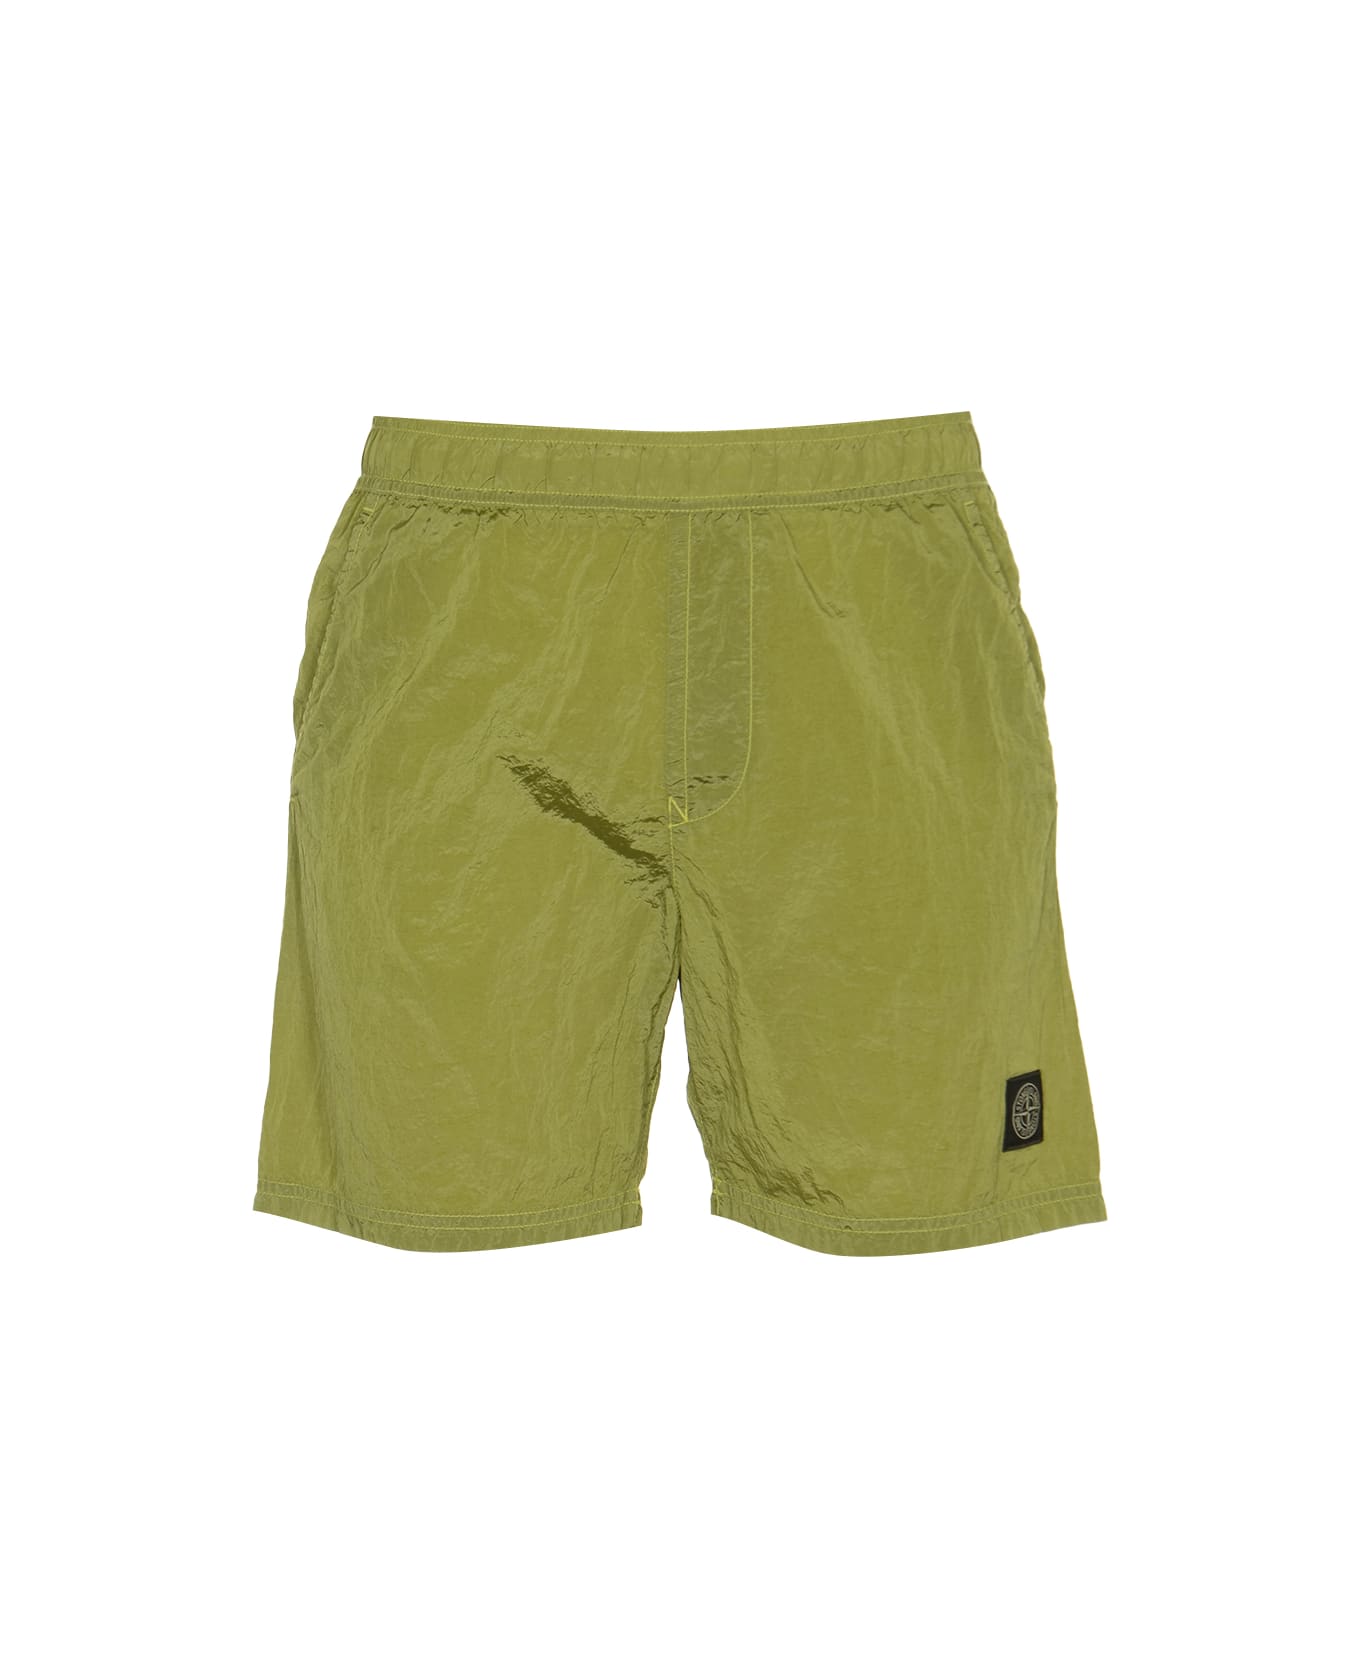 Stone Island Logo Patch Shorts - Yellow